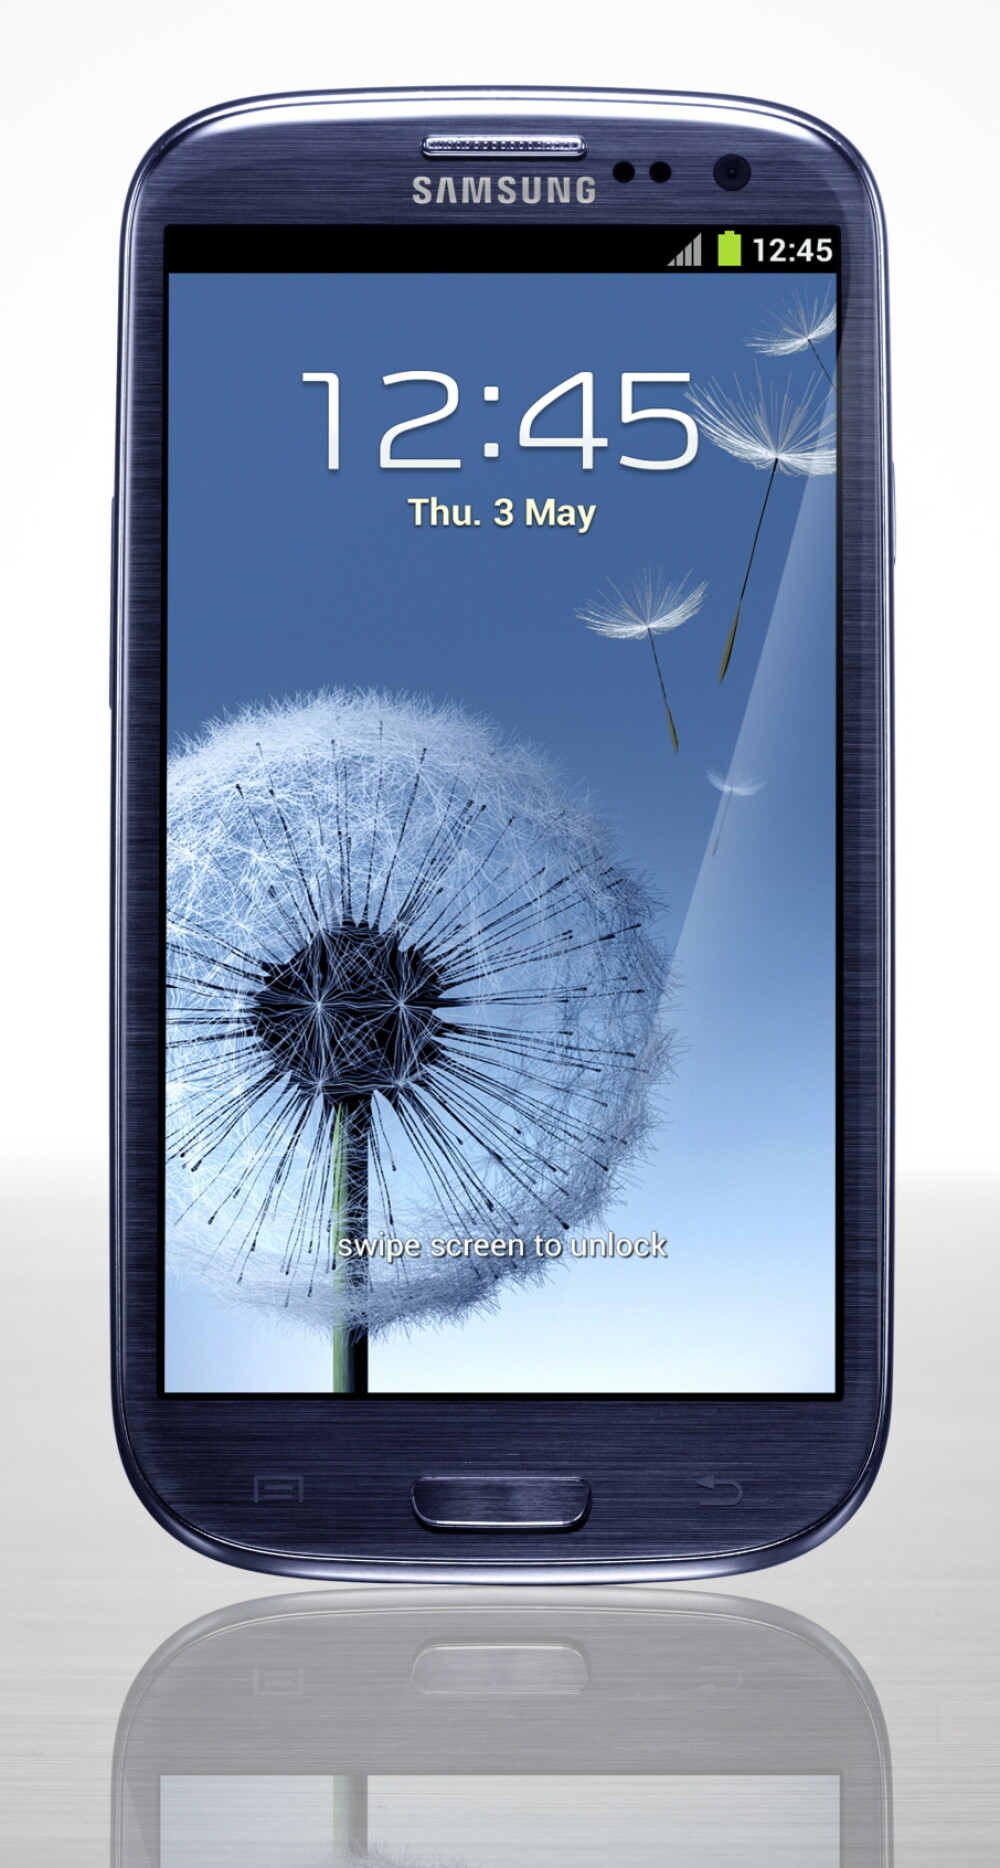 Samsung GALAXY S III - specificatii tehnice complete, noi functionalitati si GALERIE FOTO - Imaginea 9